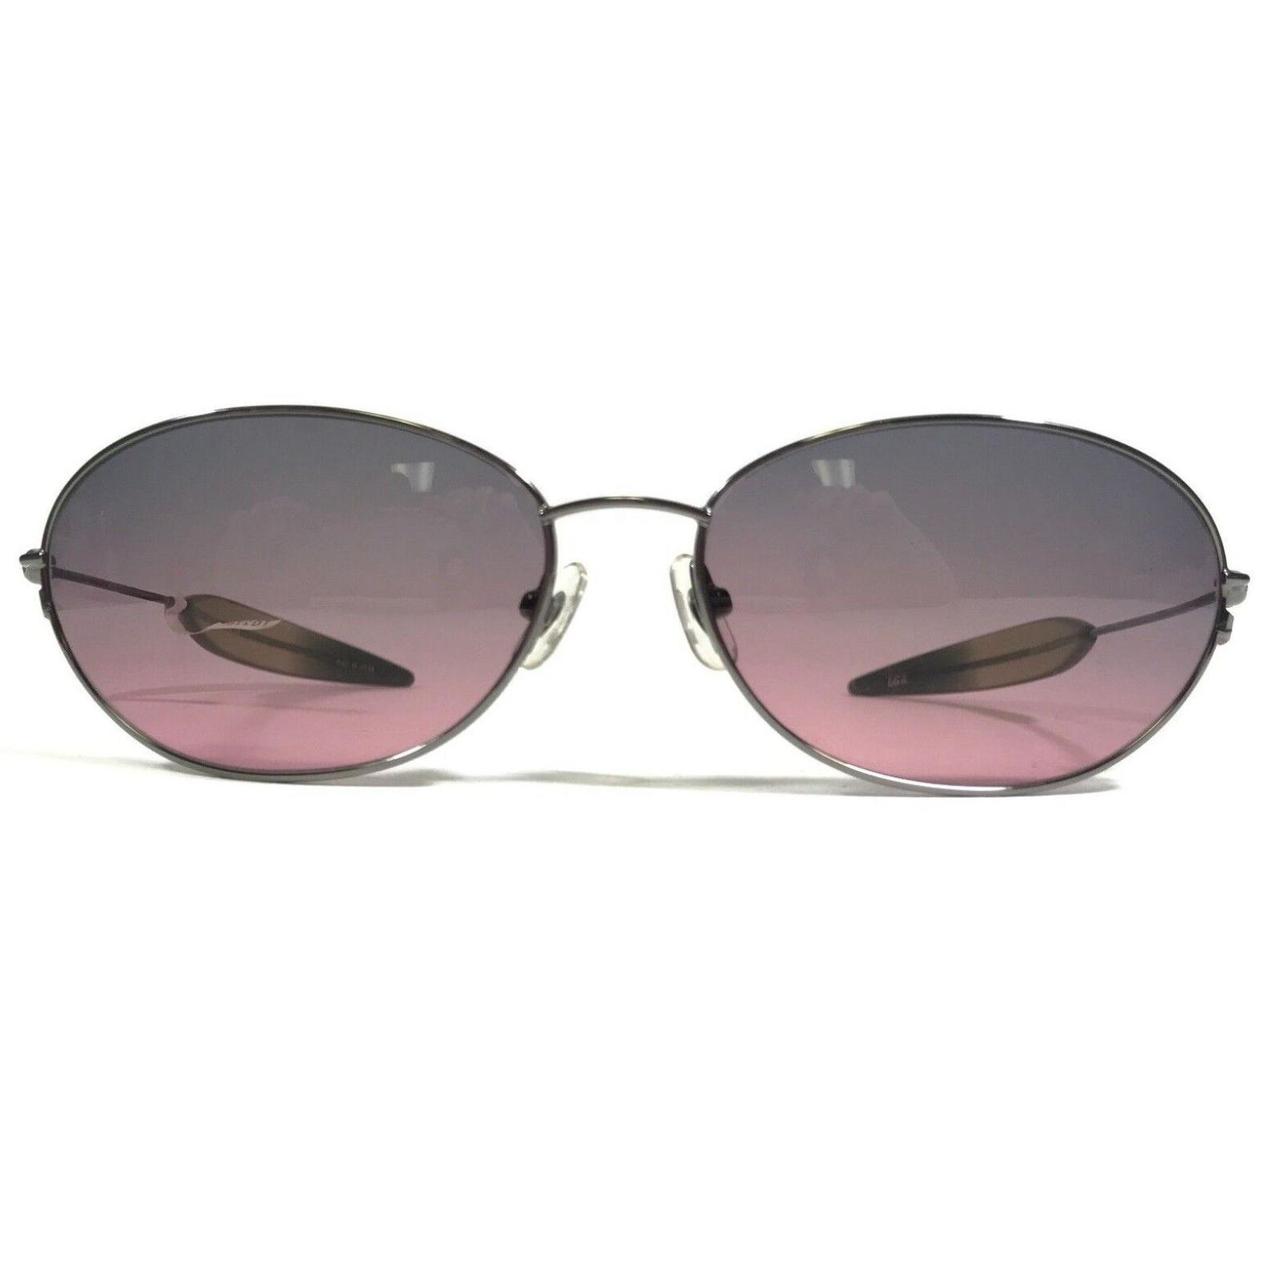 Product Image 2 - Matsuda Sunglasses 10647 LGR Gray